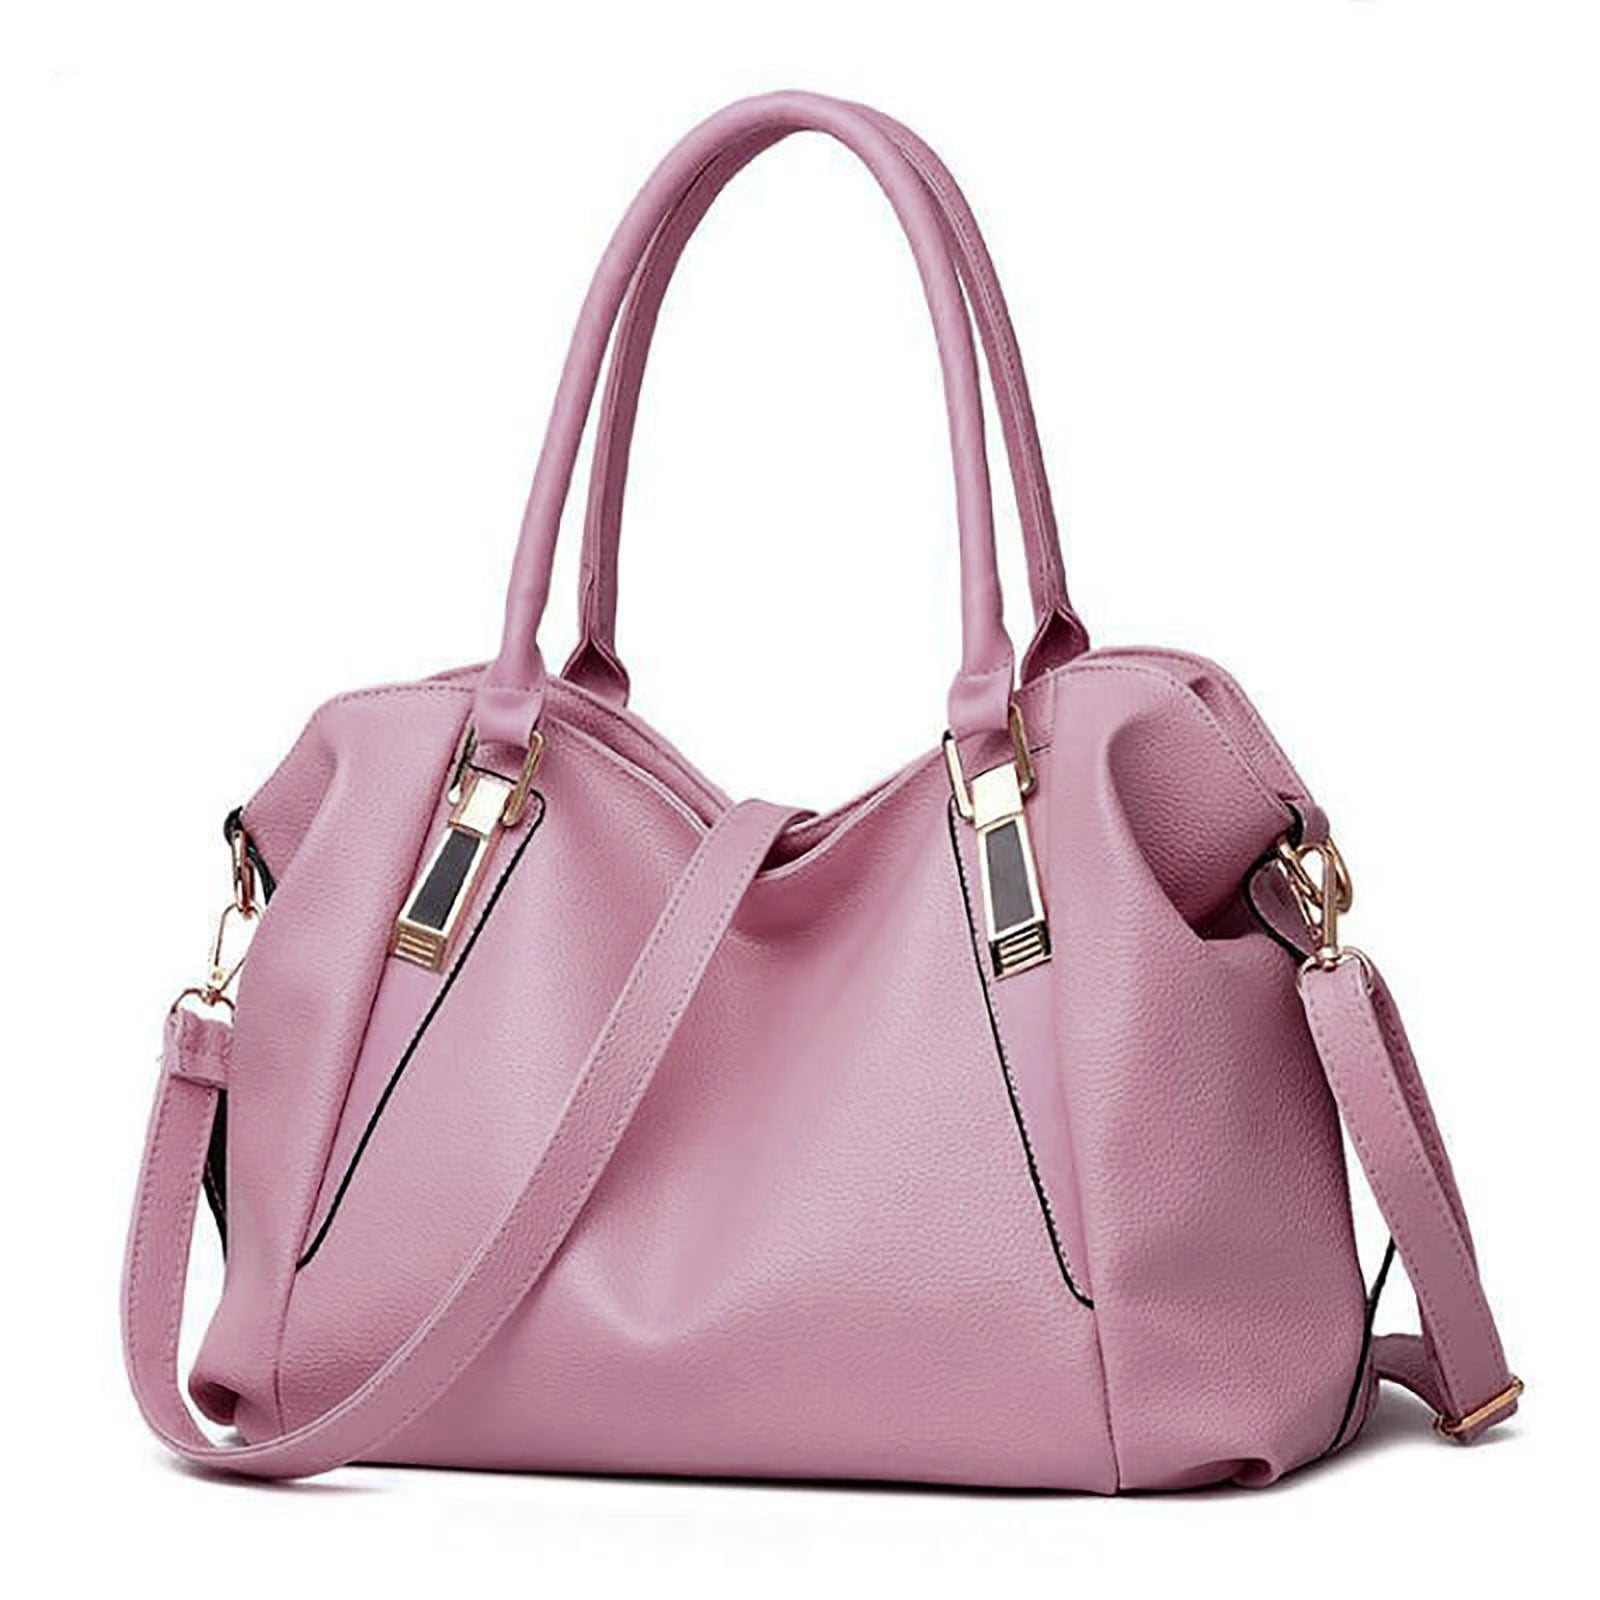 Ladies Purse Handbag| Women Shoulder Bags | Wedding Gifts For Woman